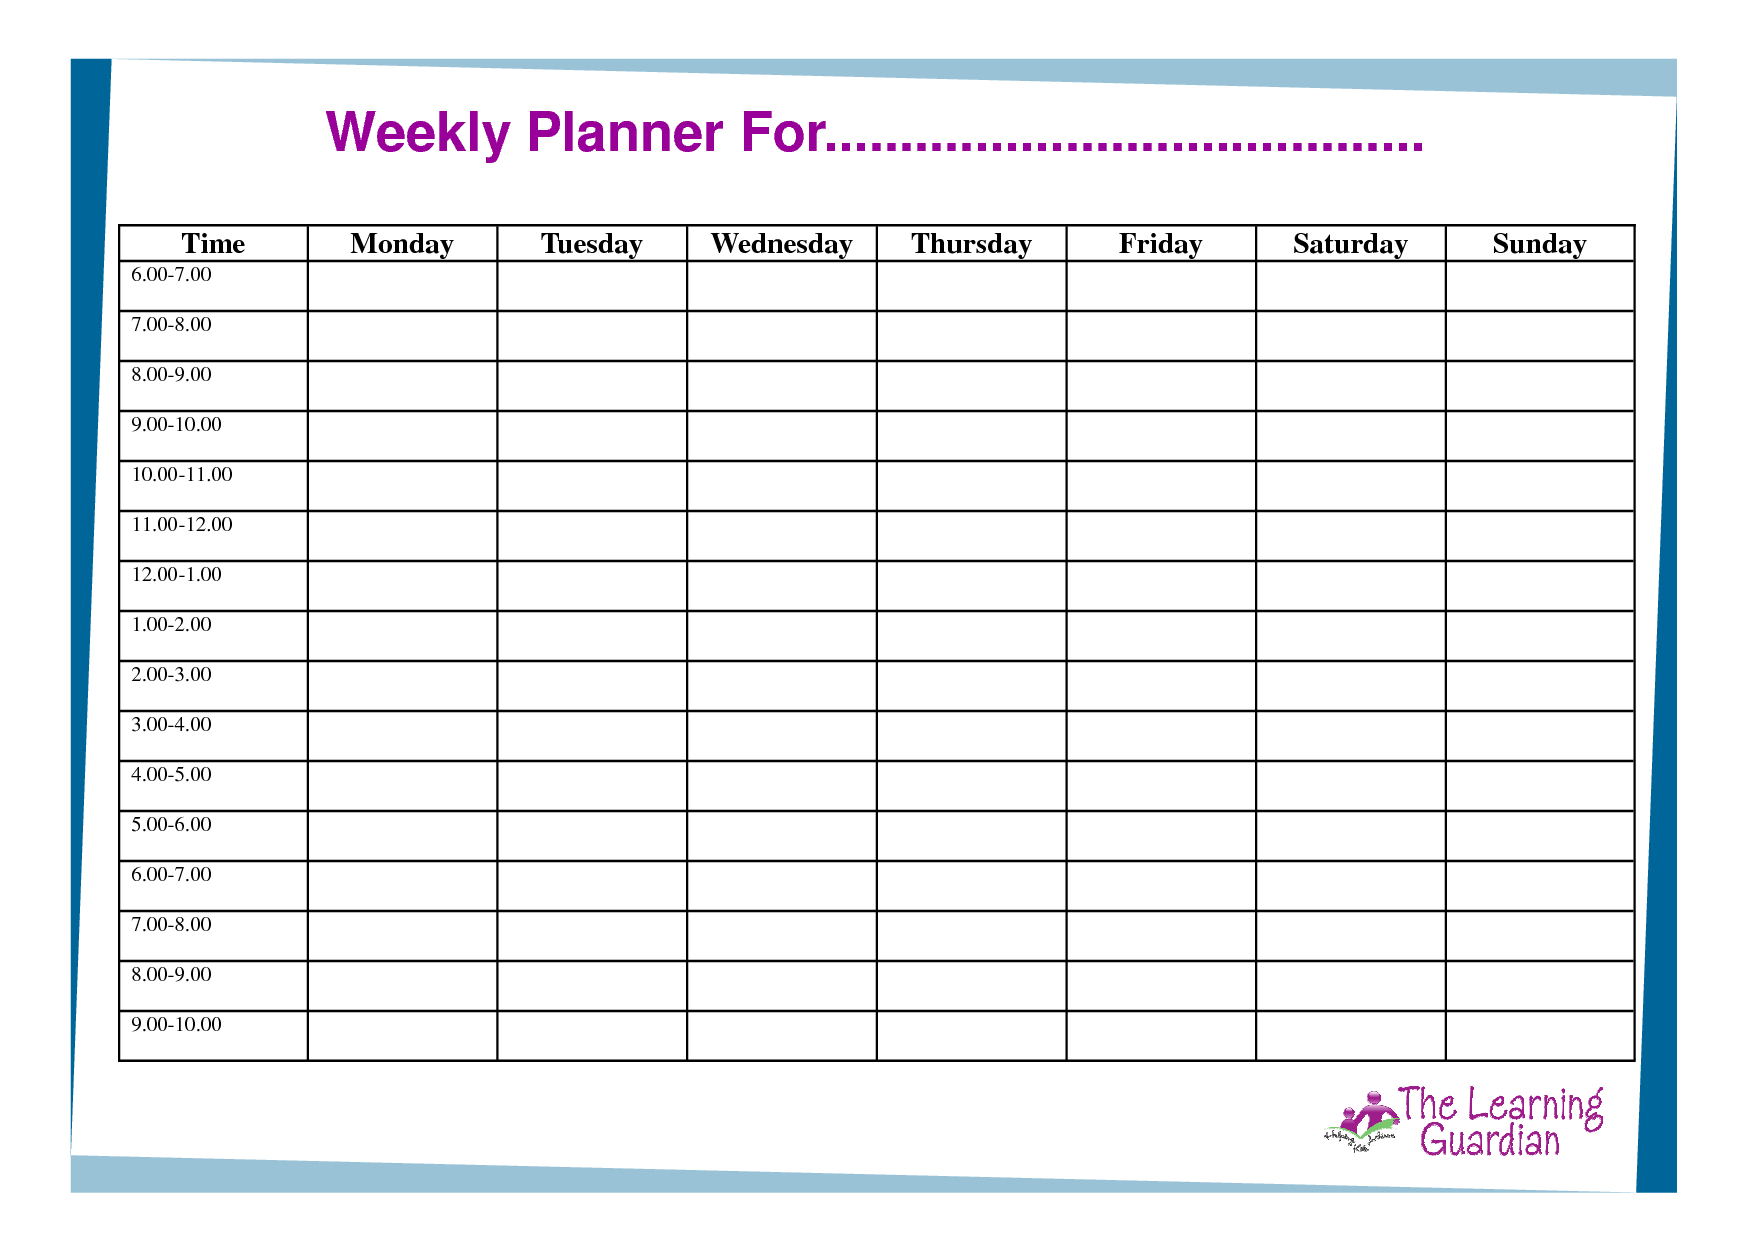 Free Printable Weekly Calendar Templates | Weekly Planner For Time - Free Printable Blank Weekly Schedule